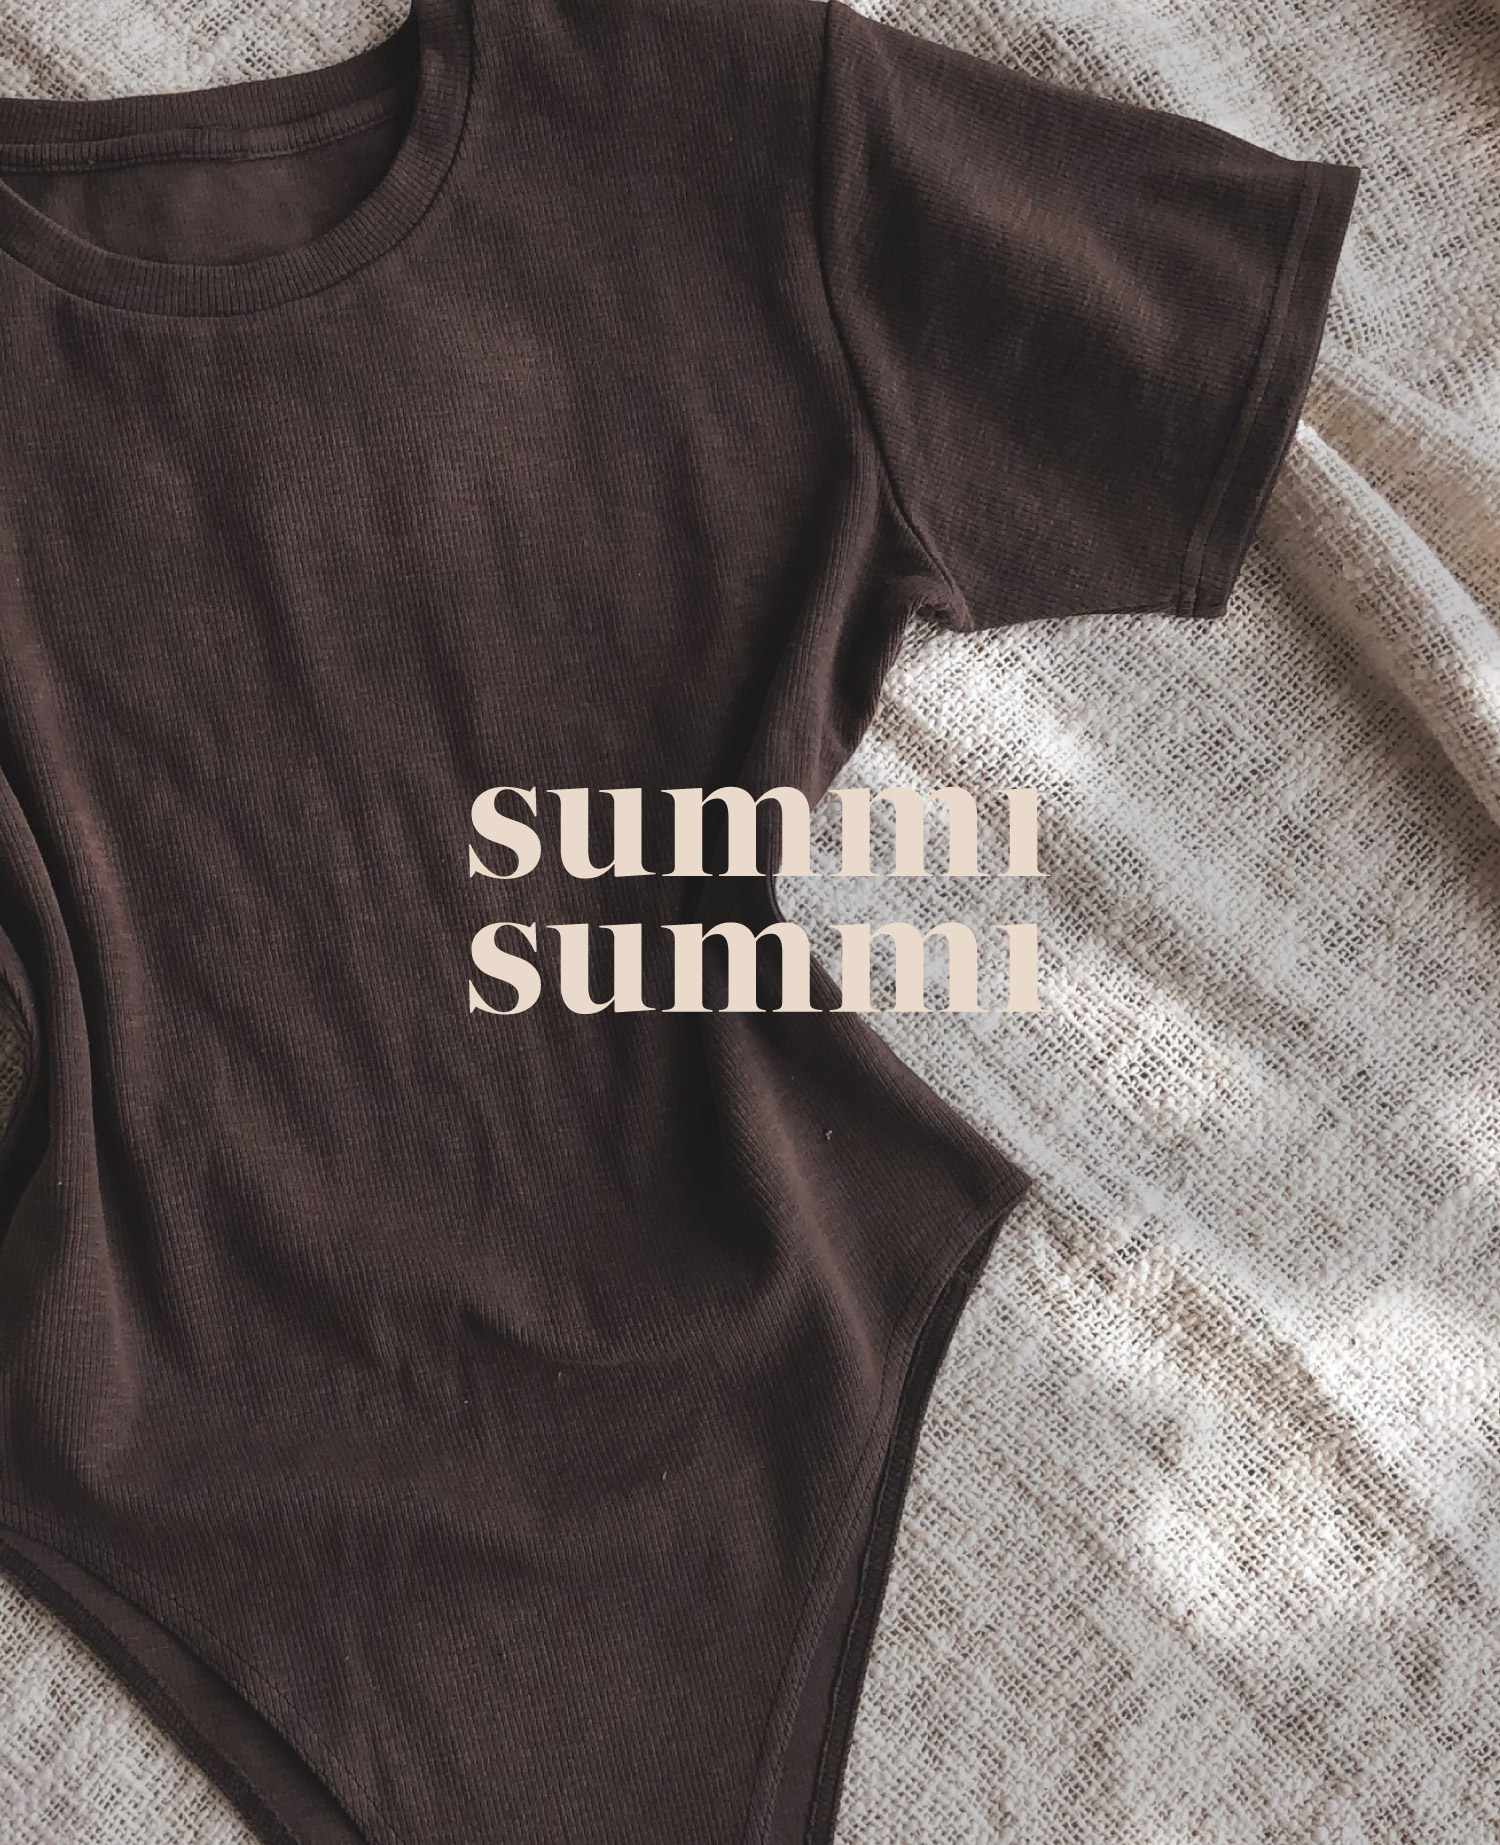 Summi Summi Logo